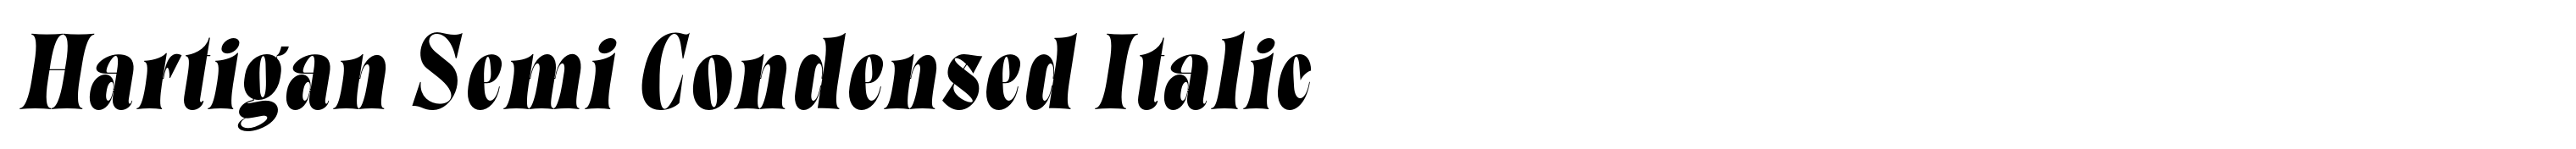 Hartigan Semi Condensed Italic